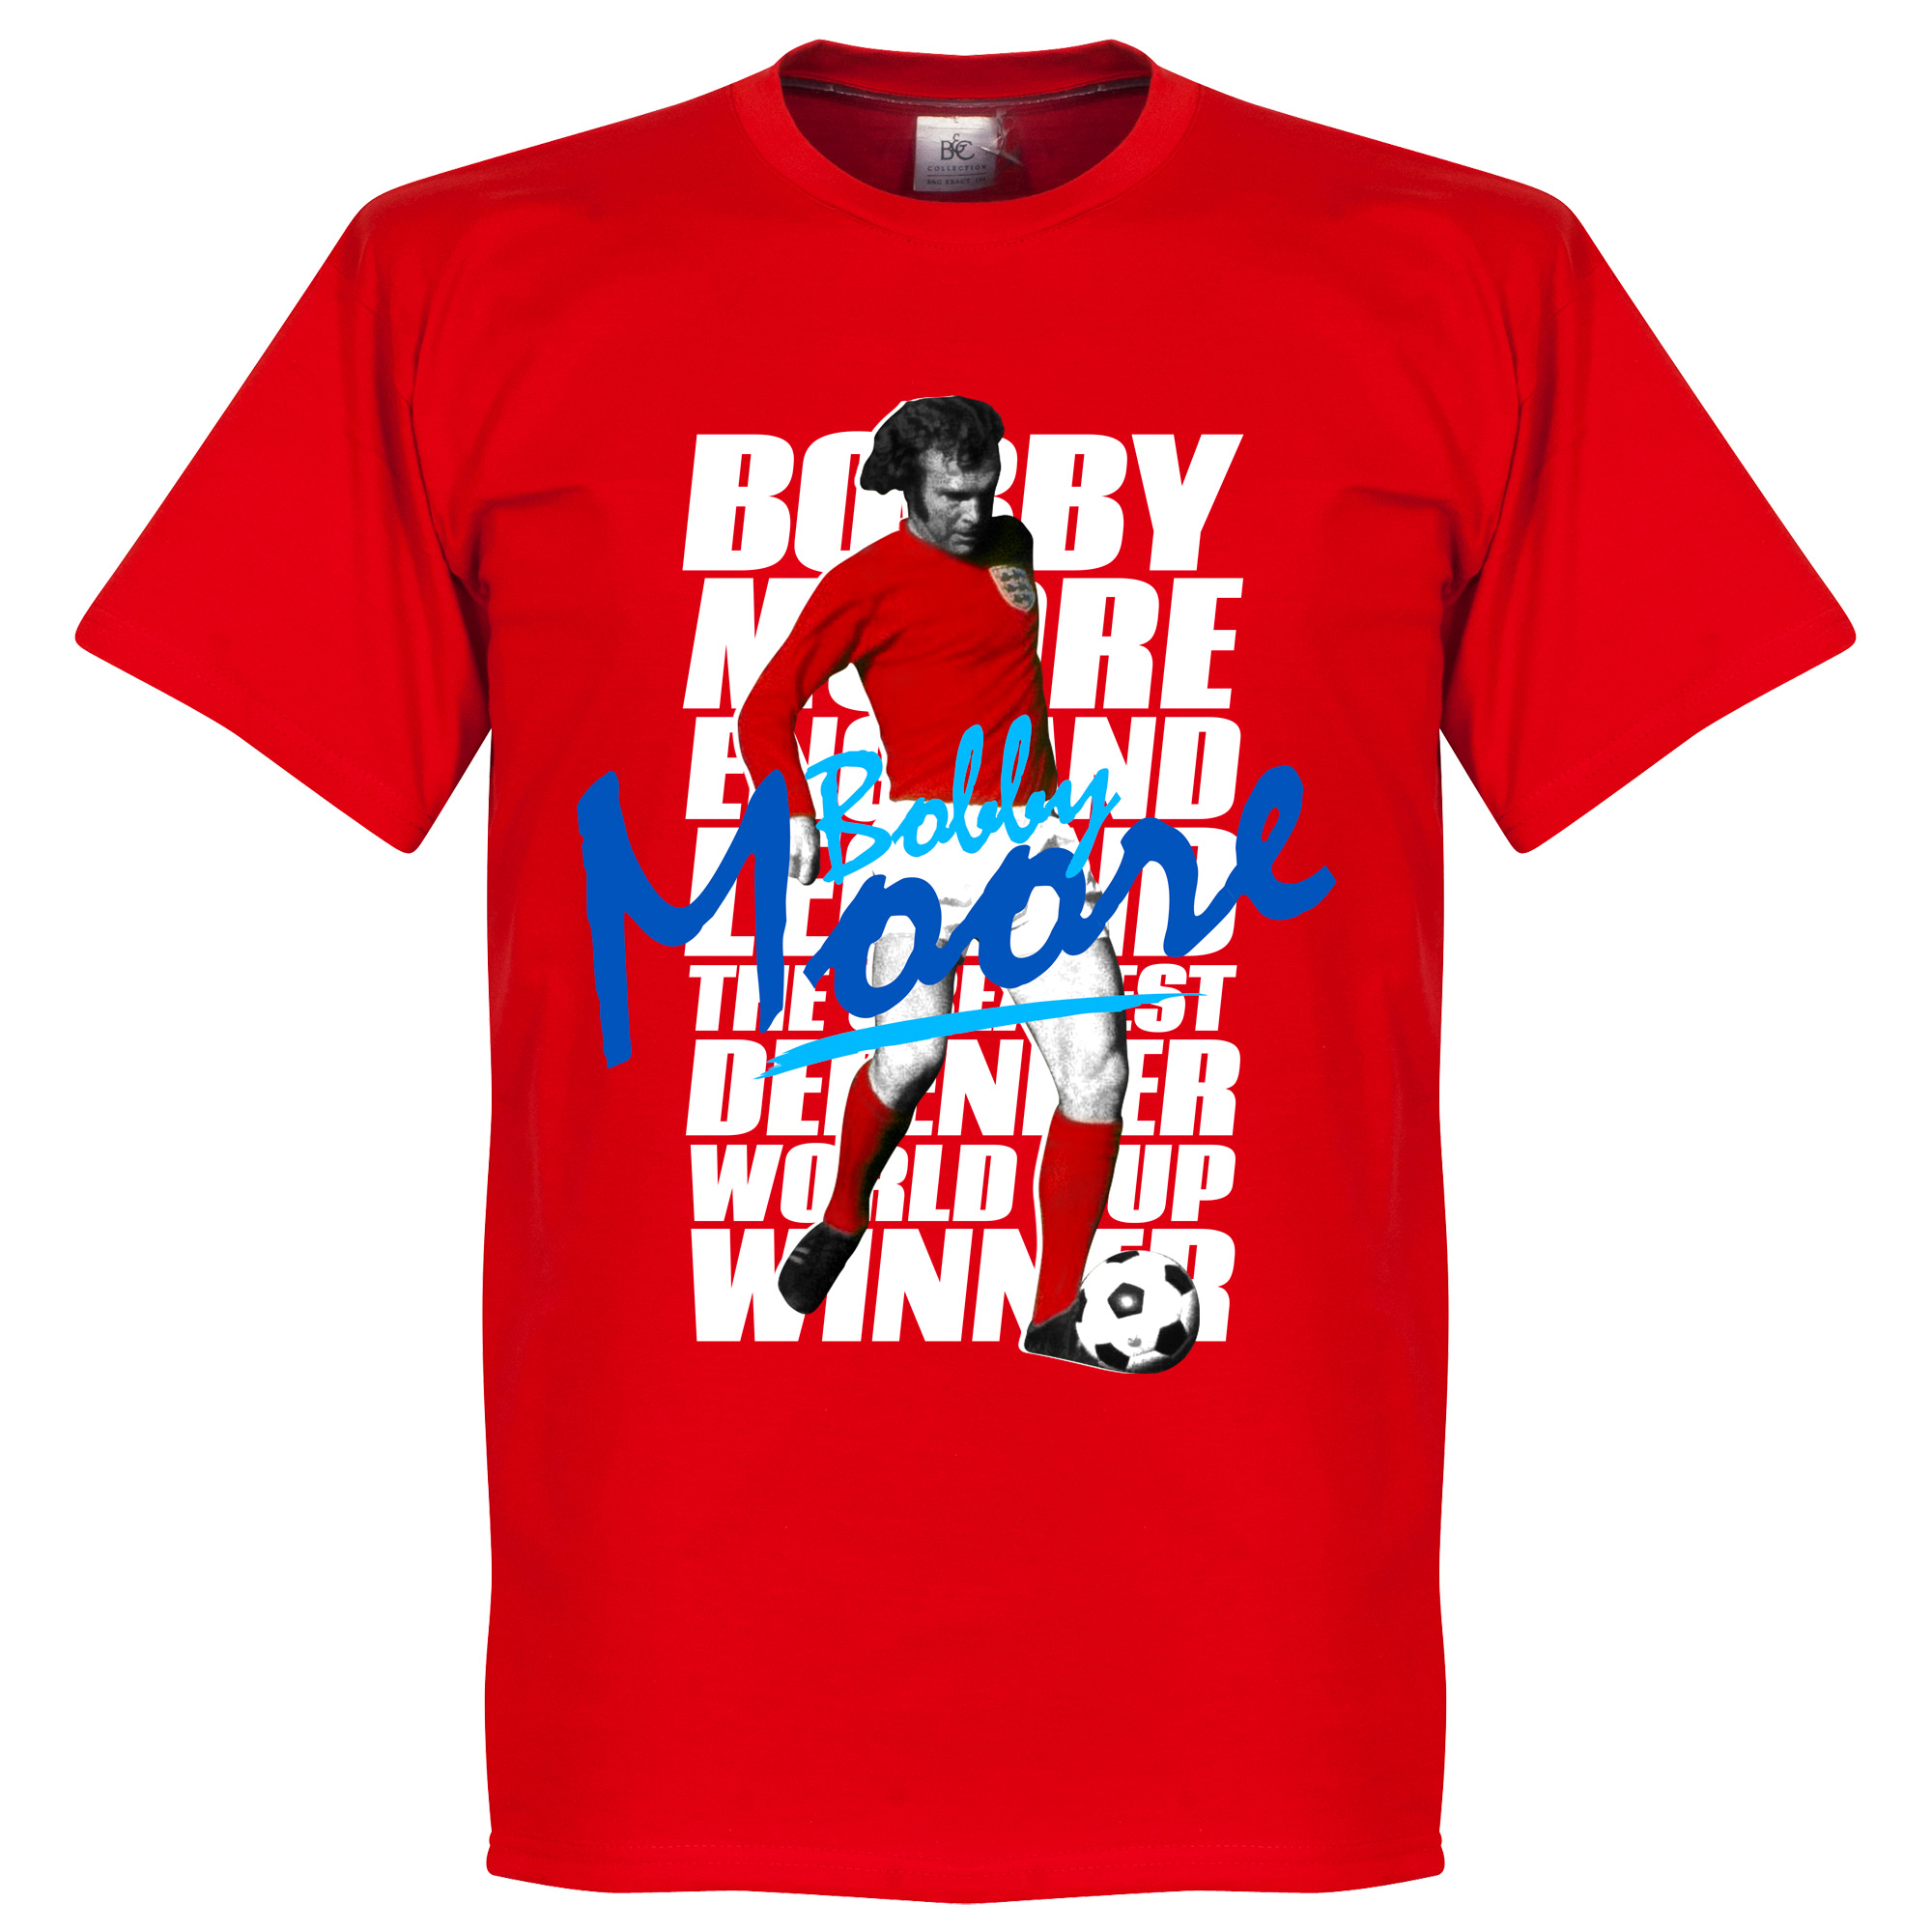 Bobby Moore Legend T-Shirt - XXXL